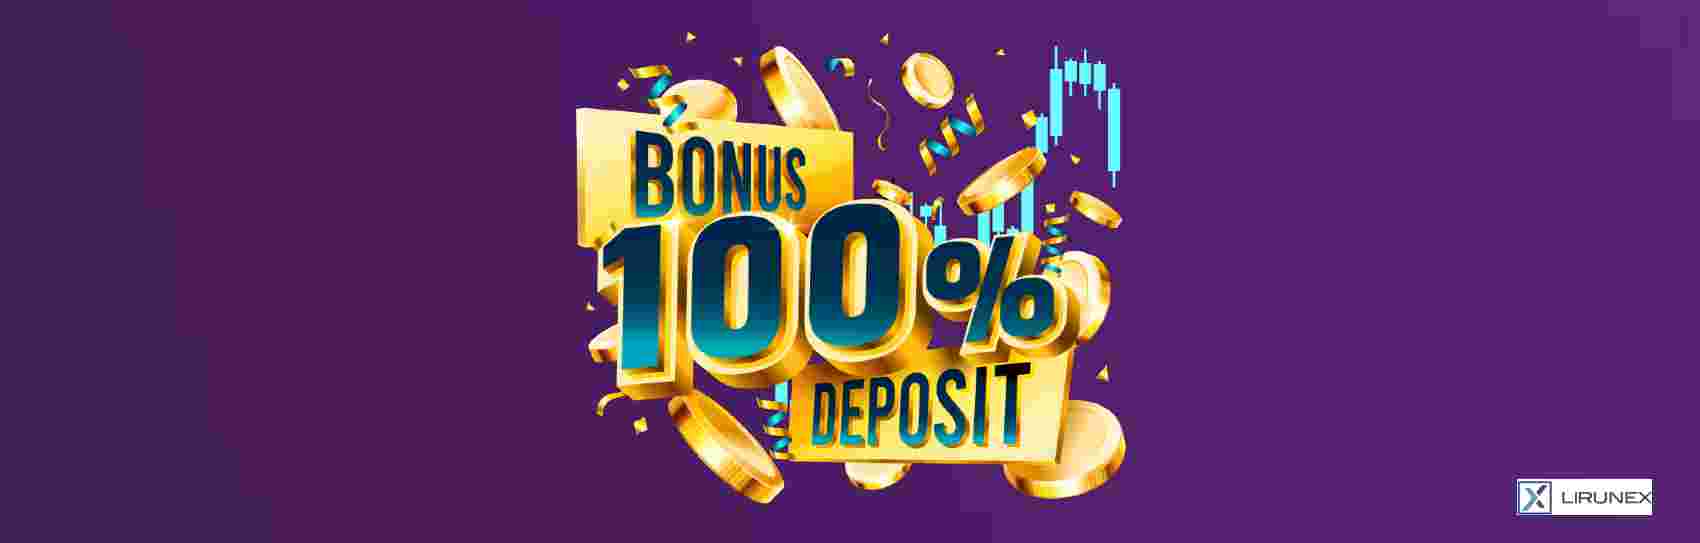 10% Deposit Bonus – Lirunex